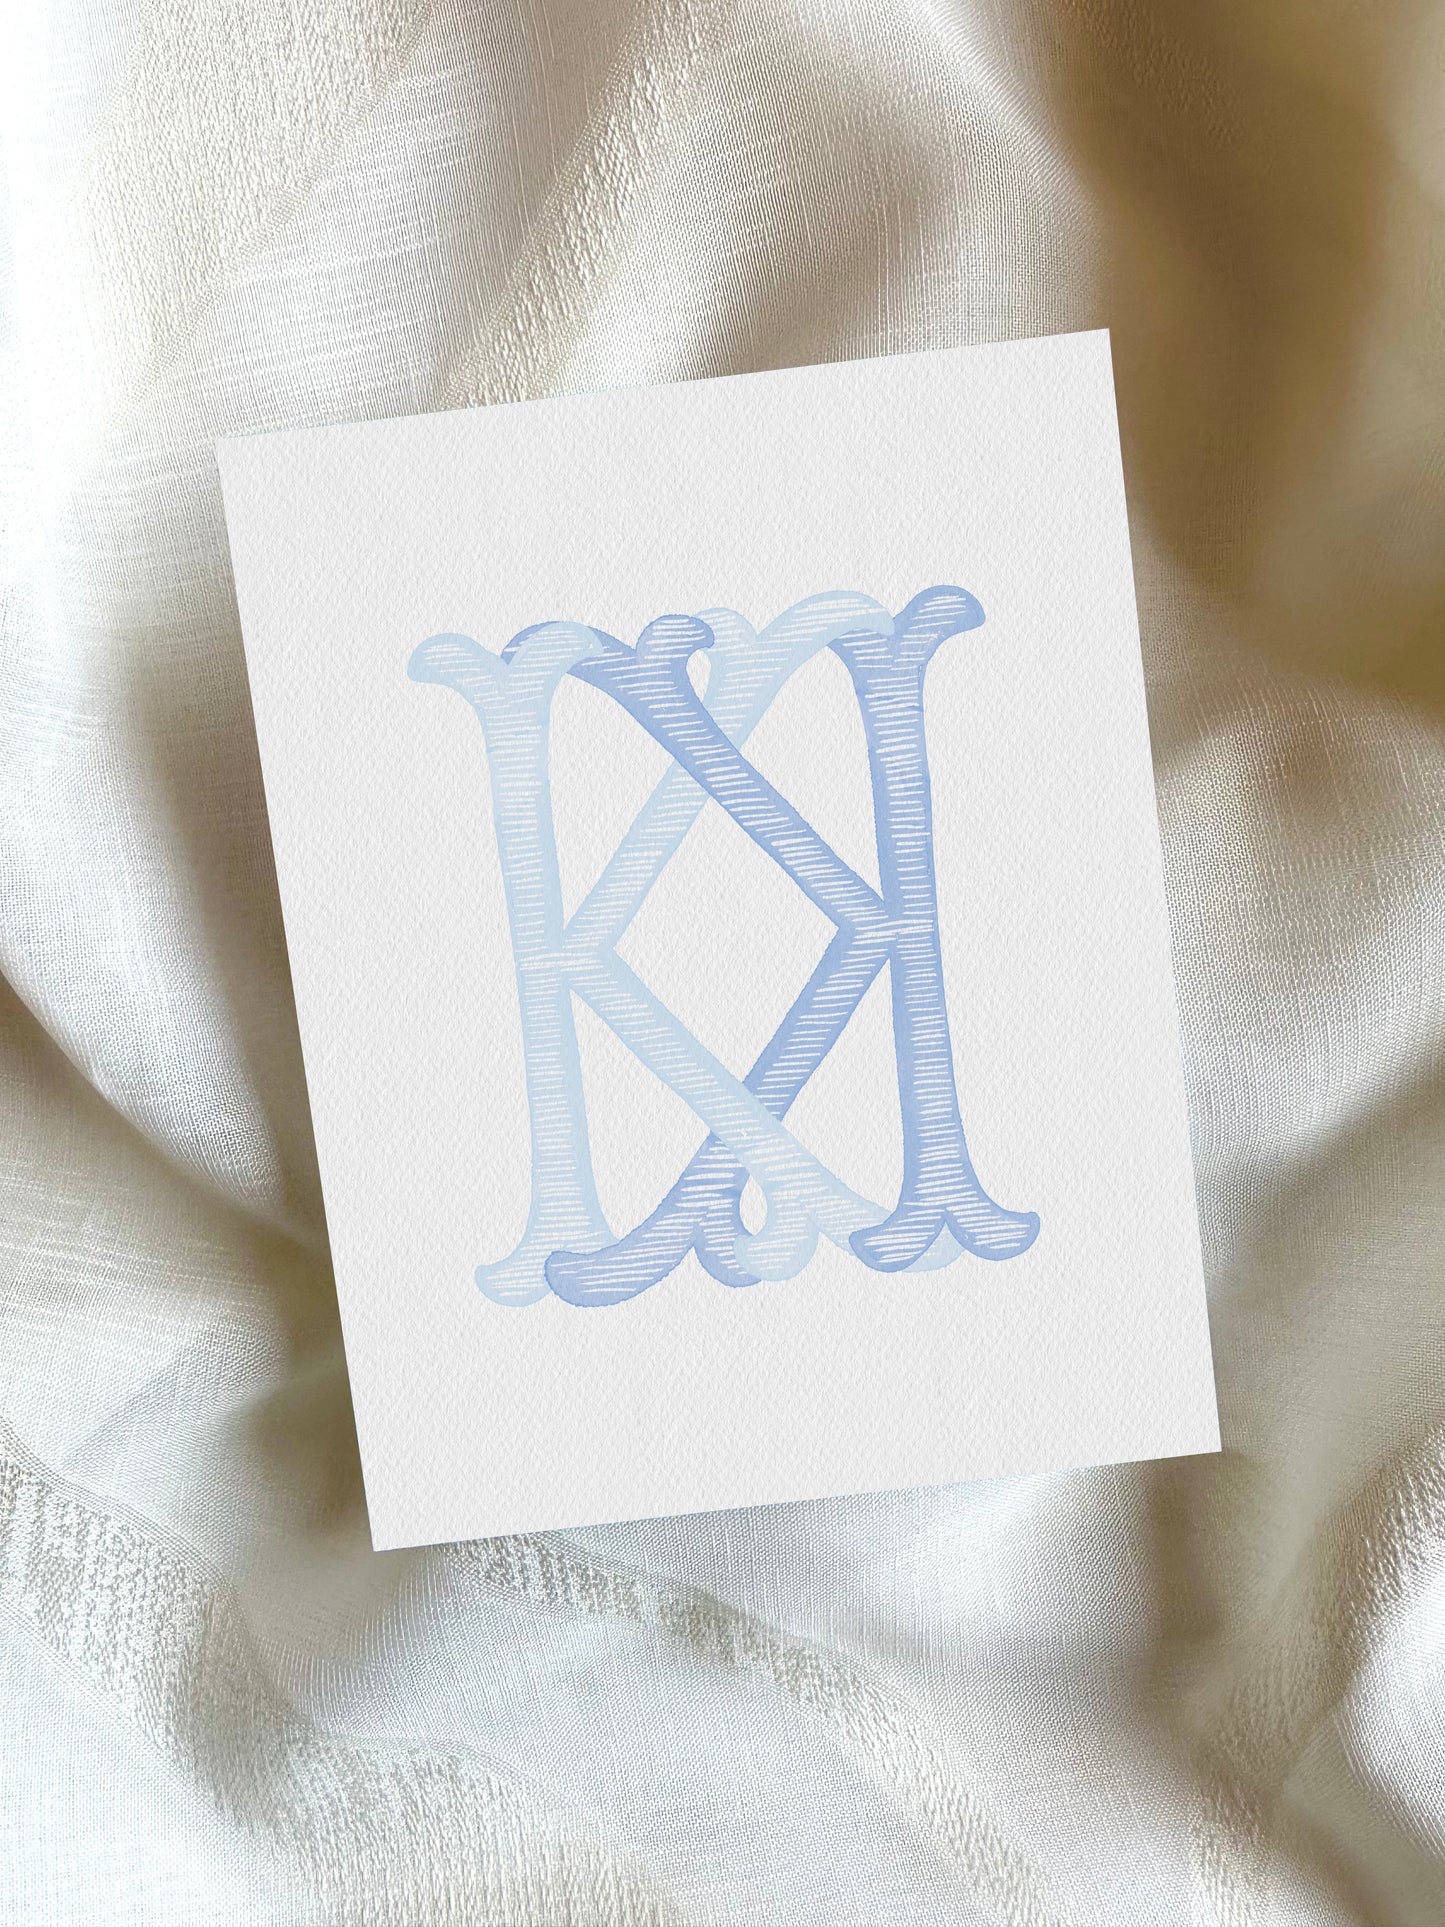 2 Letter Monogram with Letters KK | Digital Download - Wedding Monogram SVG, Personal Logo, Wedding Logo for Wedding Invitations The Wedding Crest Lab